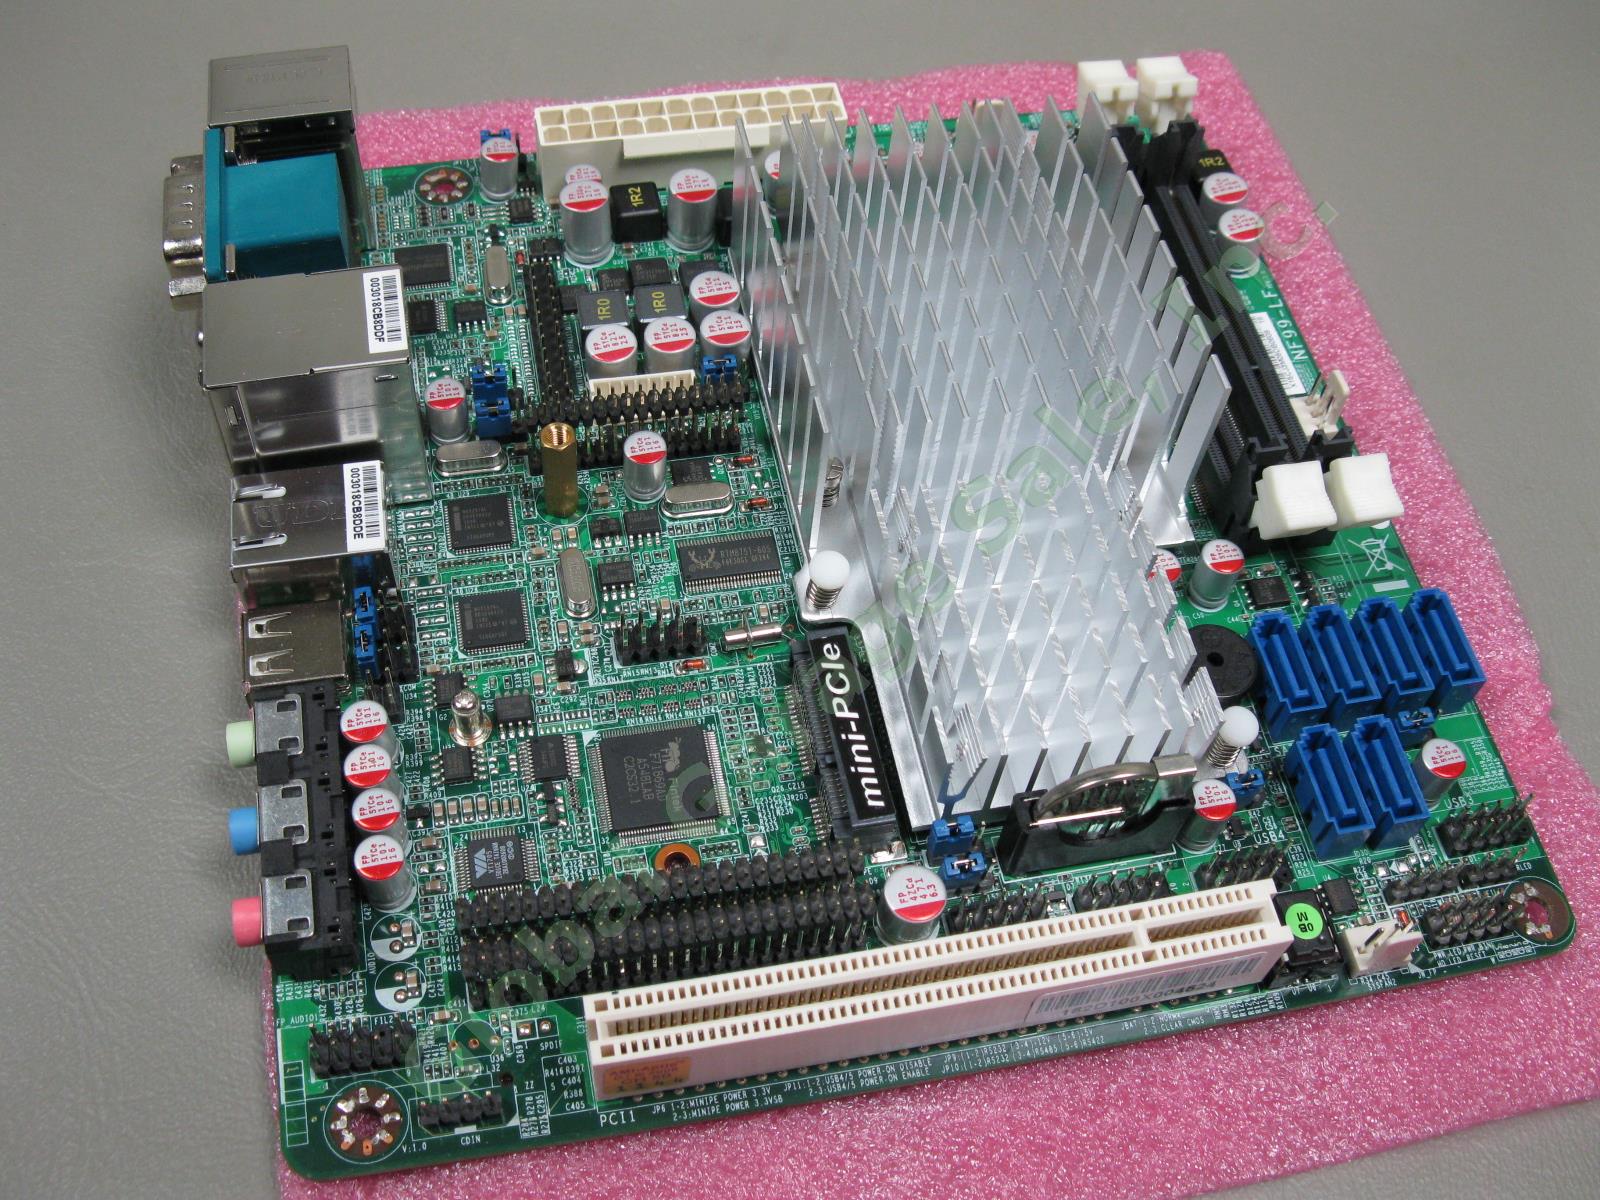 2 Jetway NF99FL-525 Pineview Intel Atom D525 LAN Networking Mini-ITX Motherboard 2